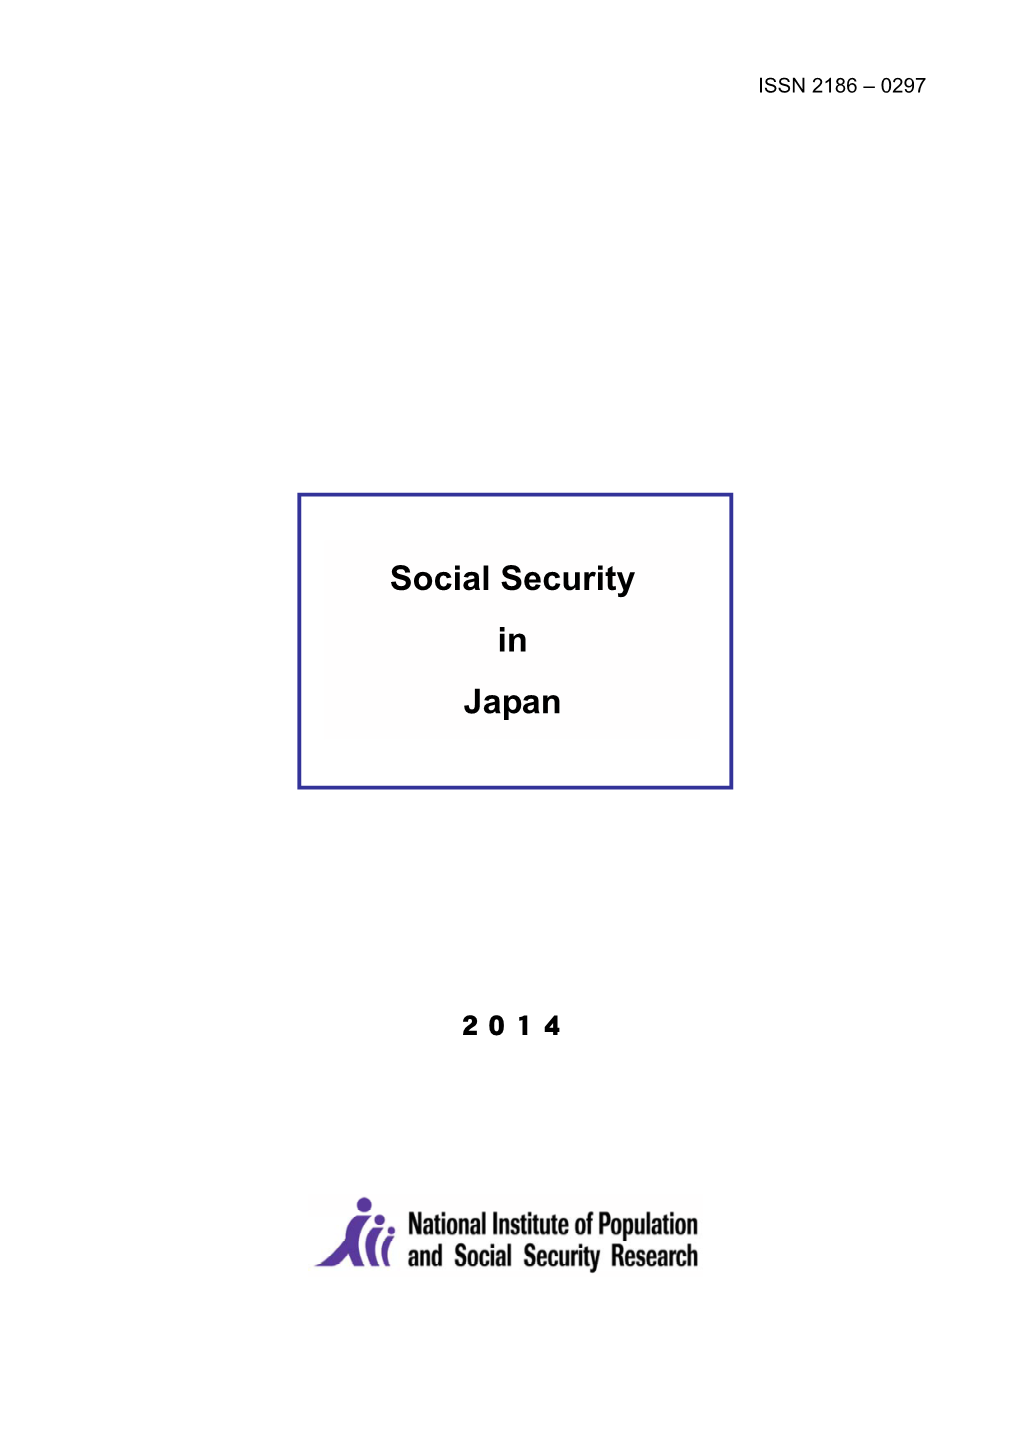 Social Security in Japan 5